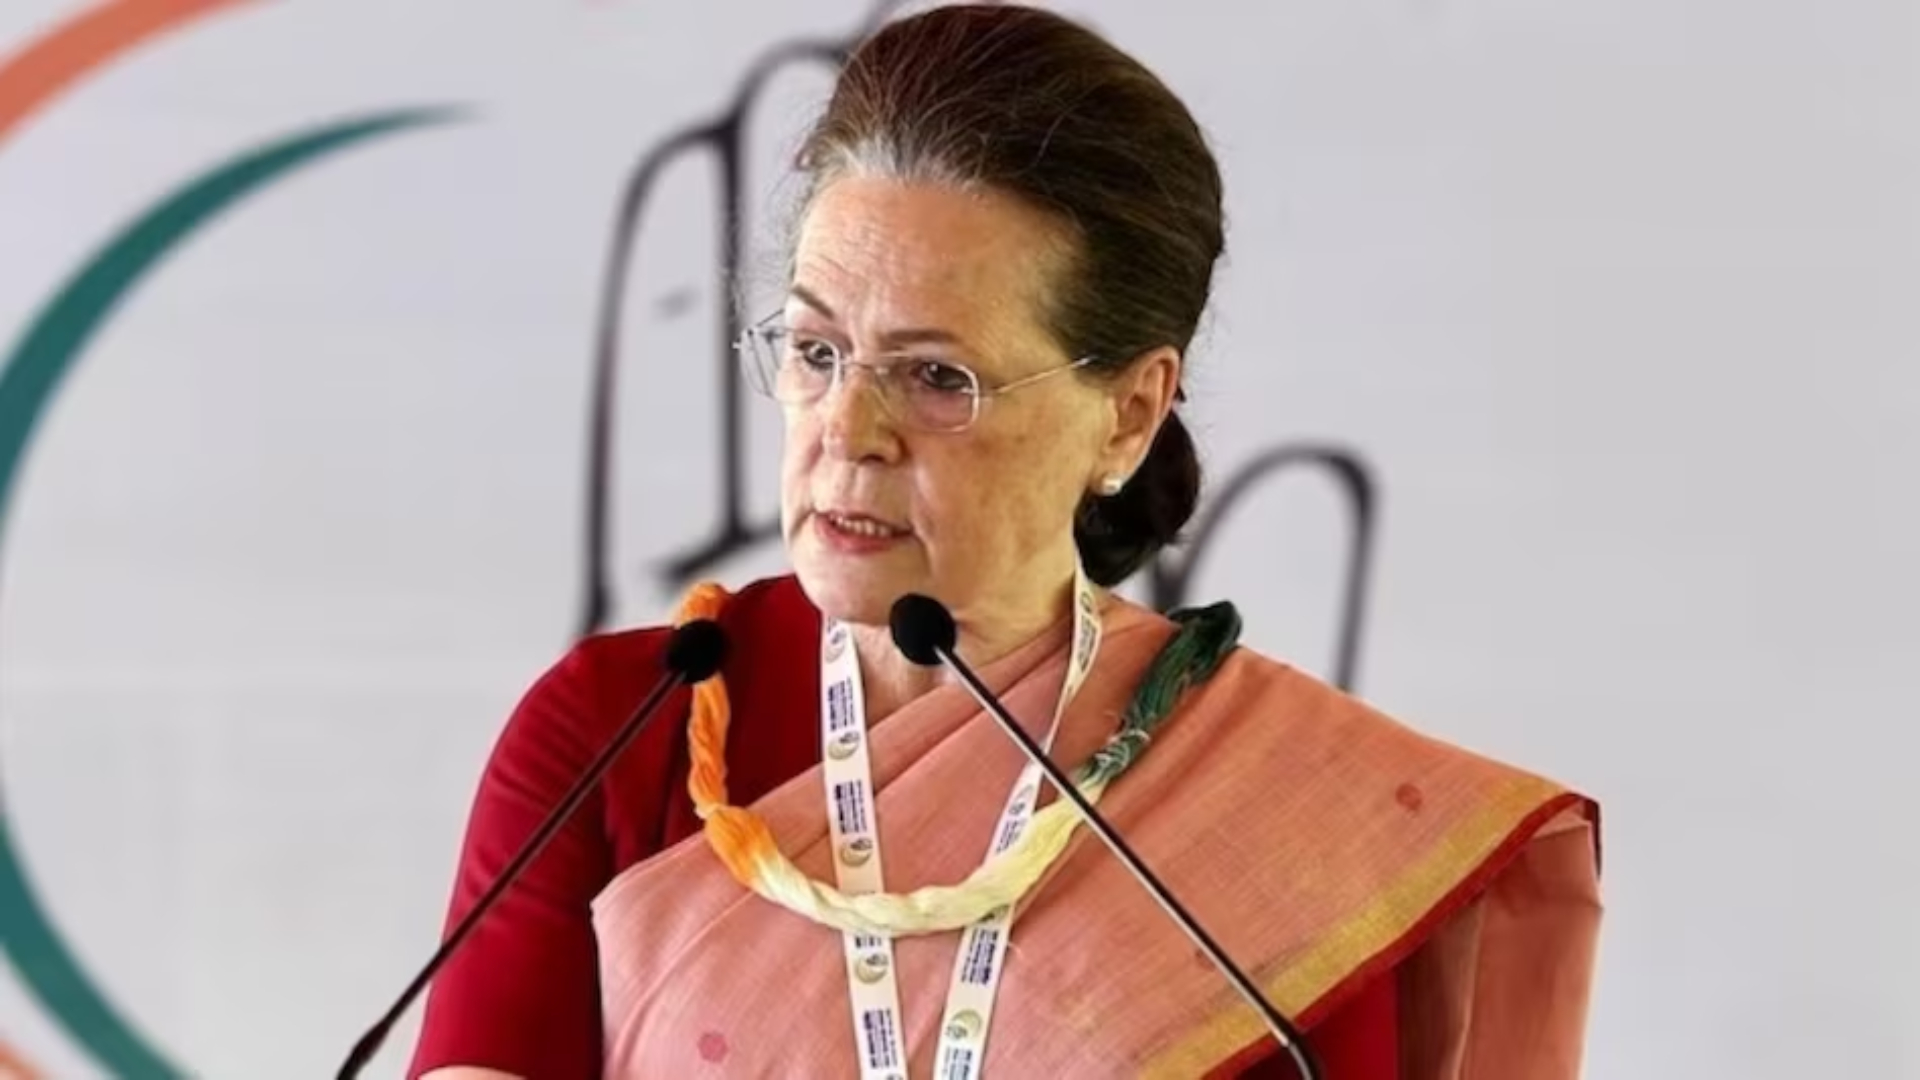 Sonia Gandhi to file nomination for Rajya Sabha elections tomorrow: Sources